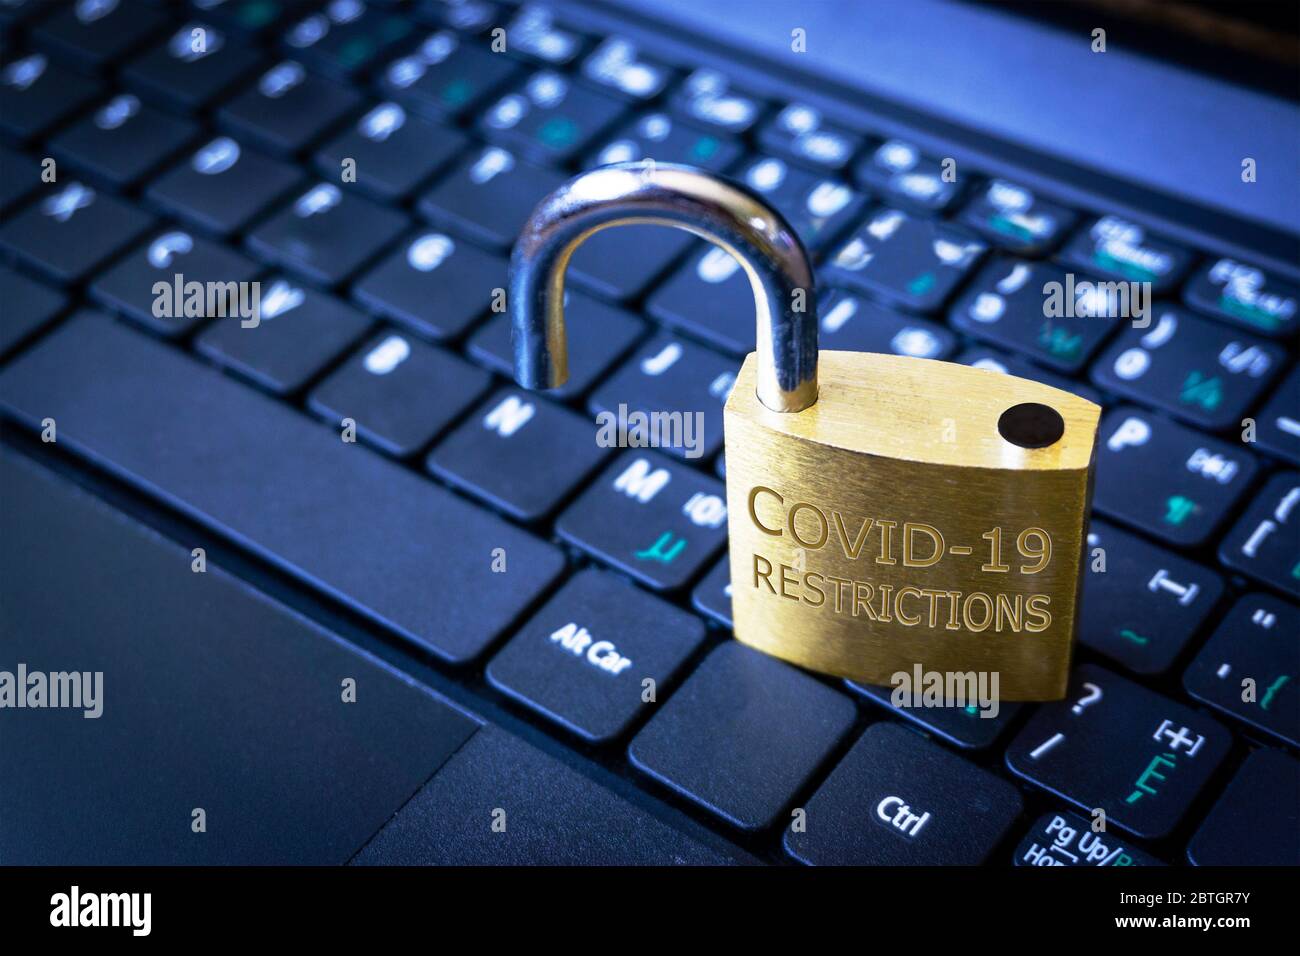 COVID-19 coronavirus lockdown restrictions ease concept illustrated by unlocked padlock on laptop. Stock Photo